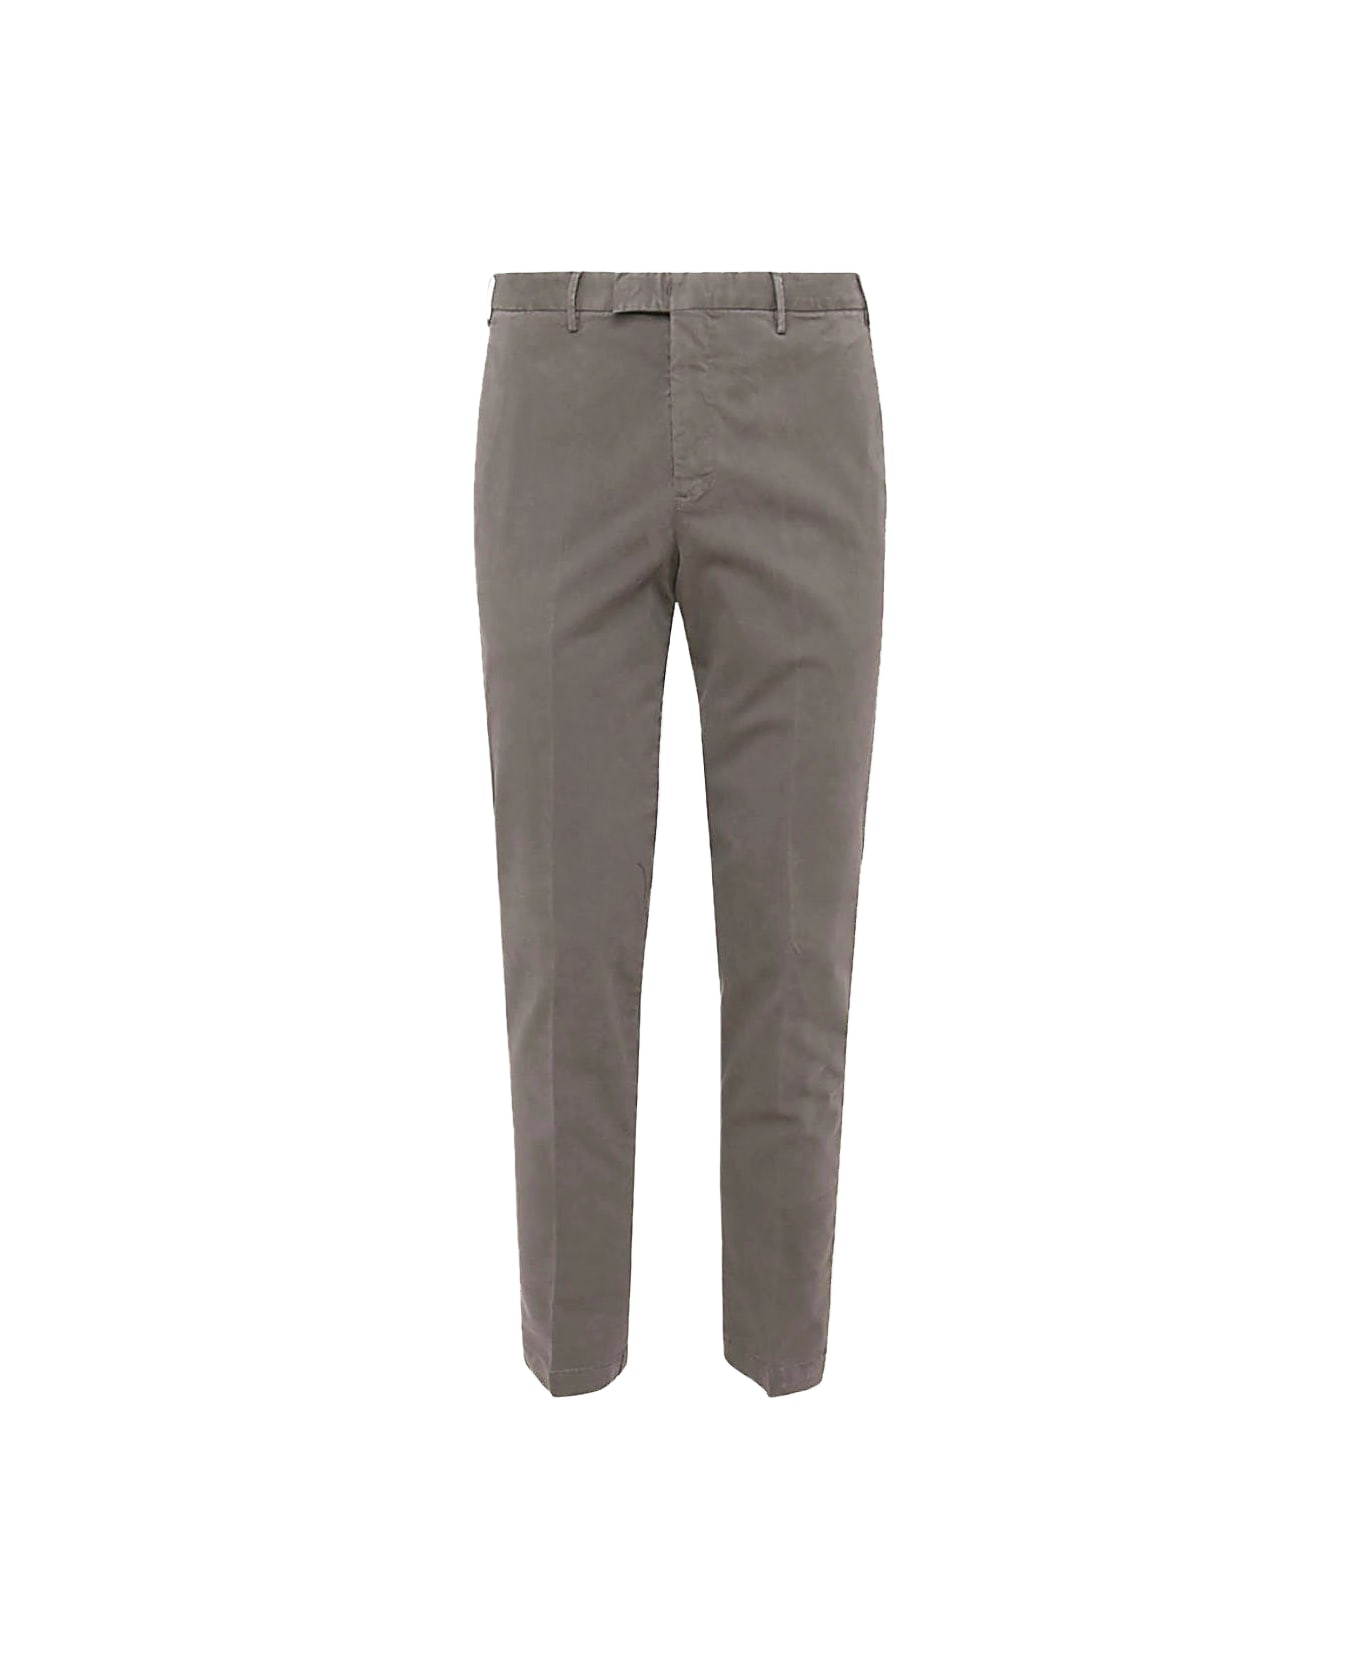 PT Torino Grey Cotton Pants - Dove Grey